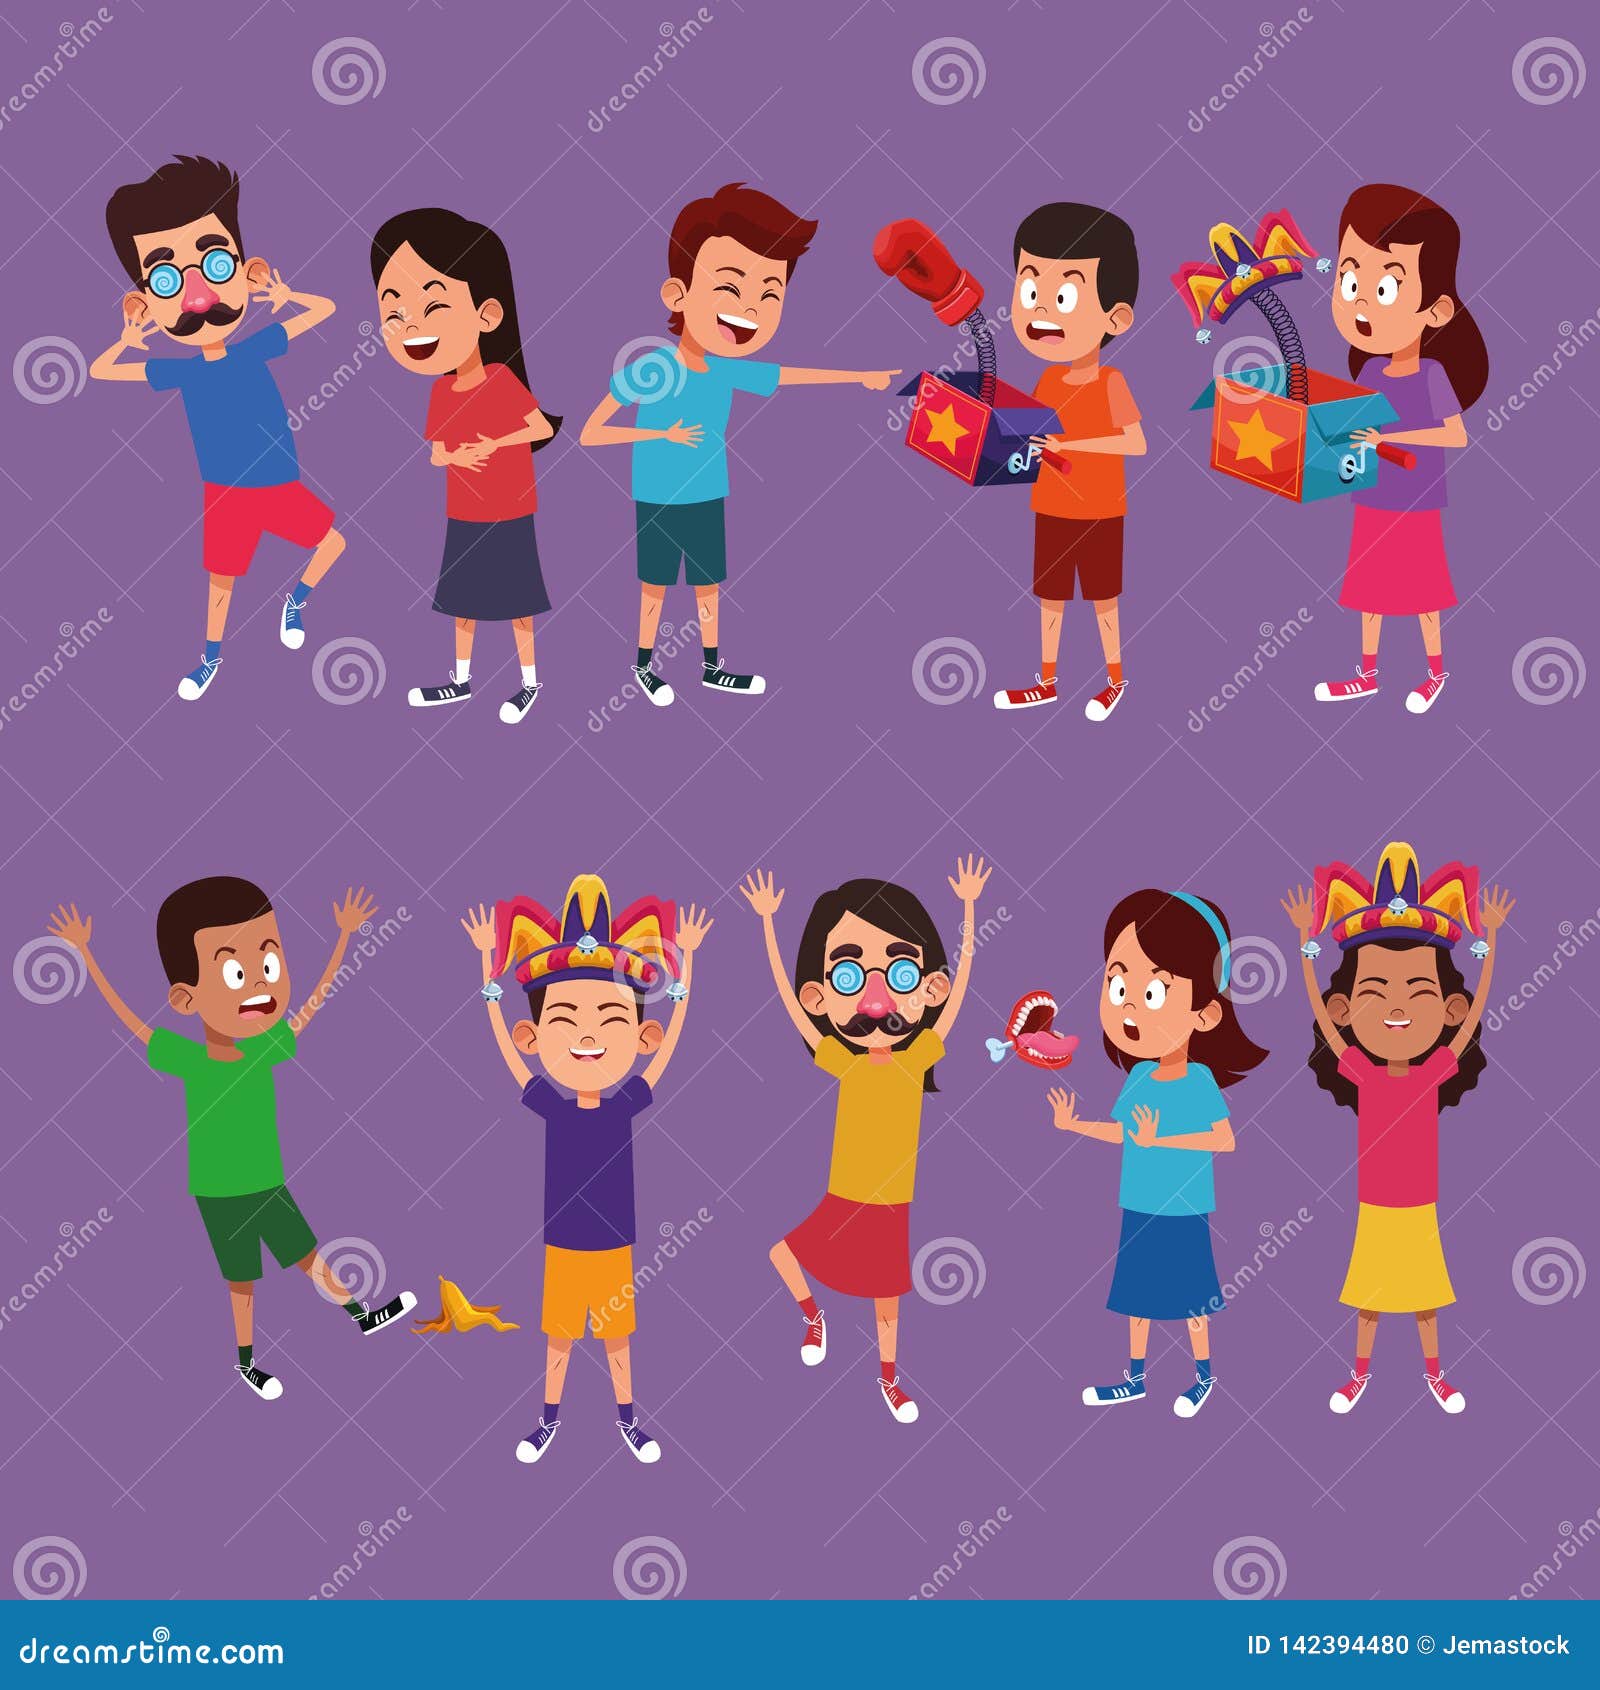 Kids with jokes cartoons stock vector. Illustration of cartoons - 142394480